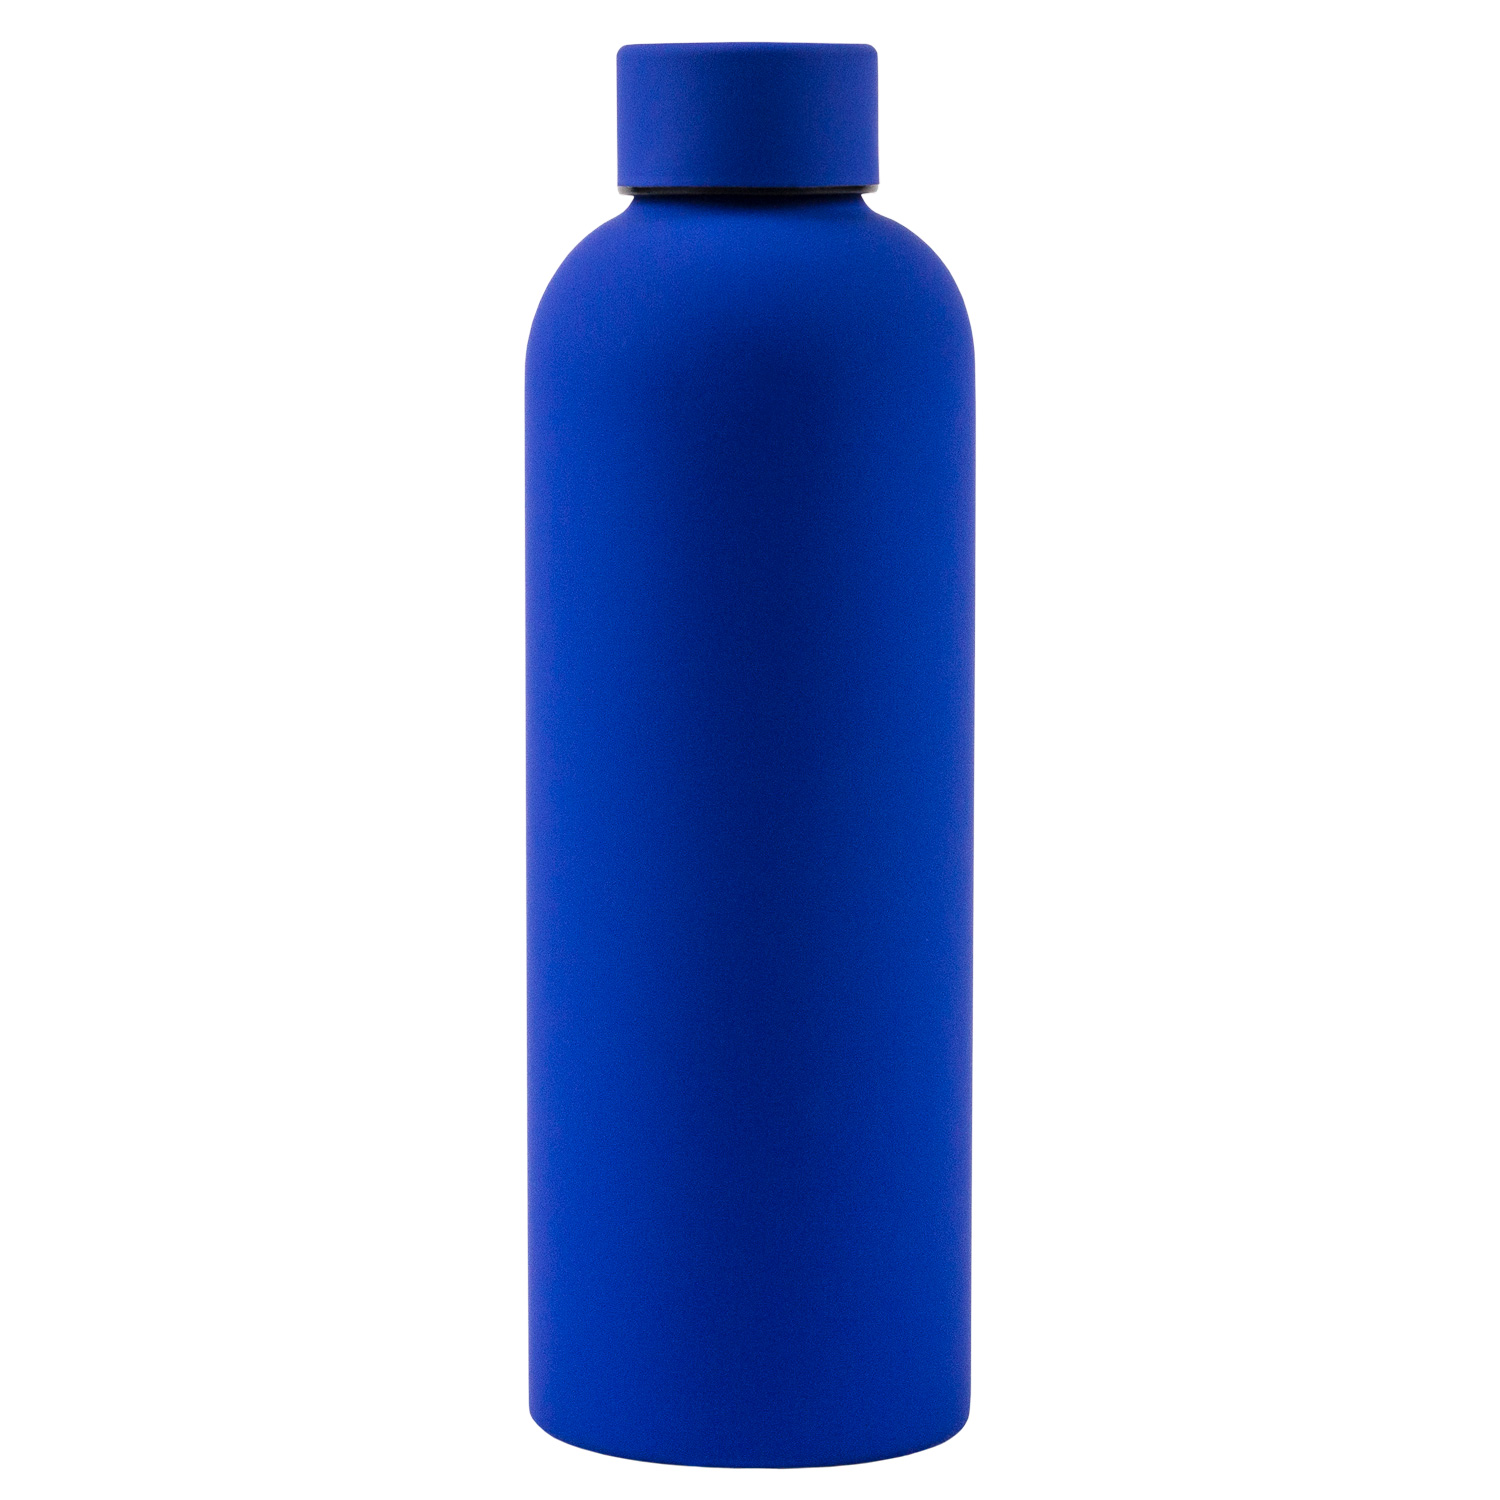 Артикул: A211022.130 — Термобутылка вакуумная герметичная, Prima, Ultramarine, 500 ml, ярко-синяя